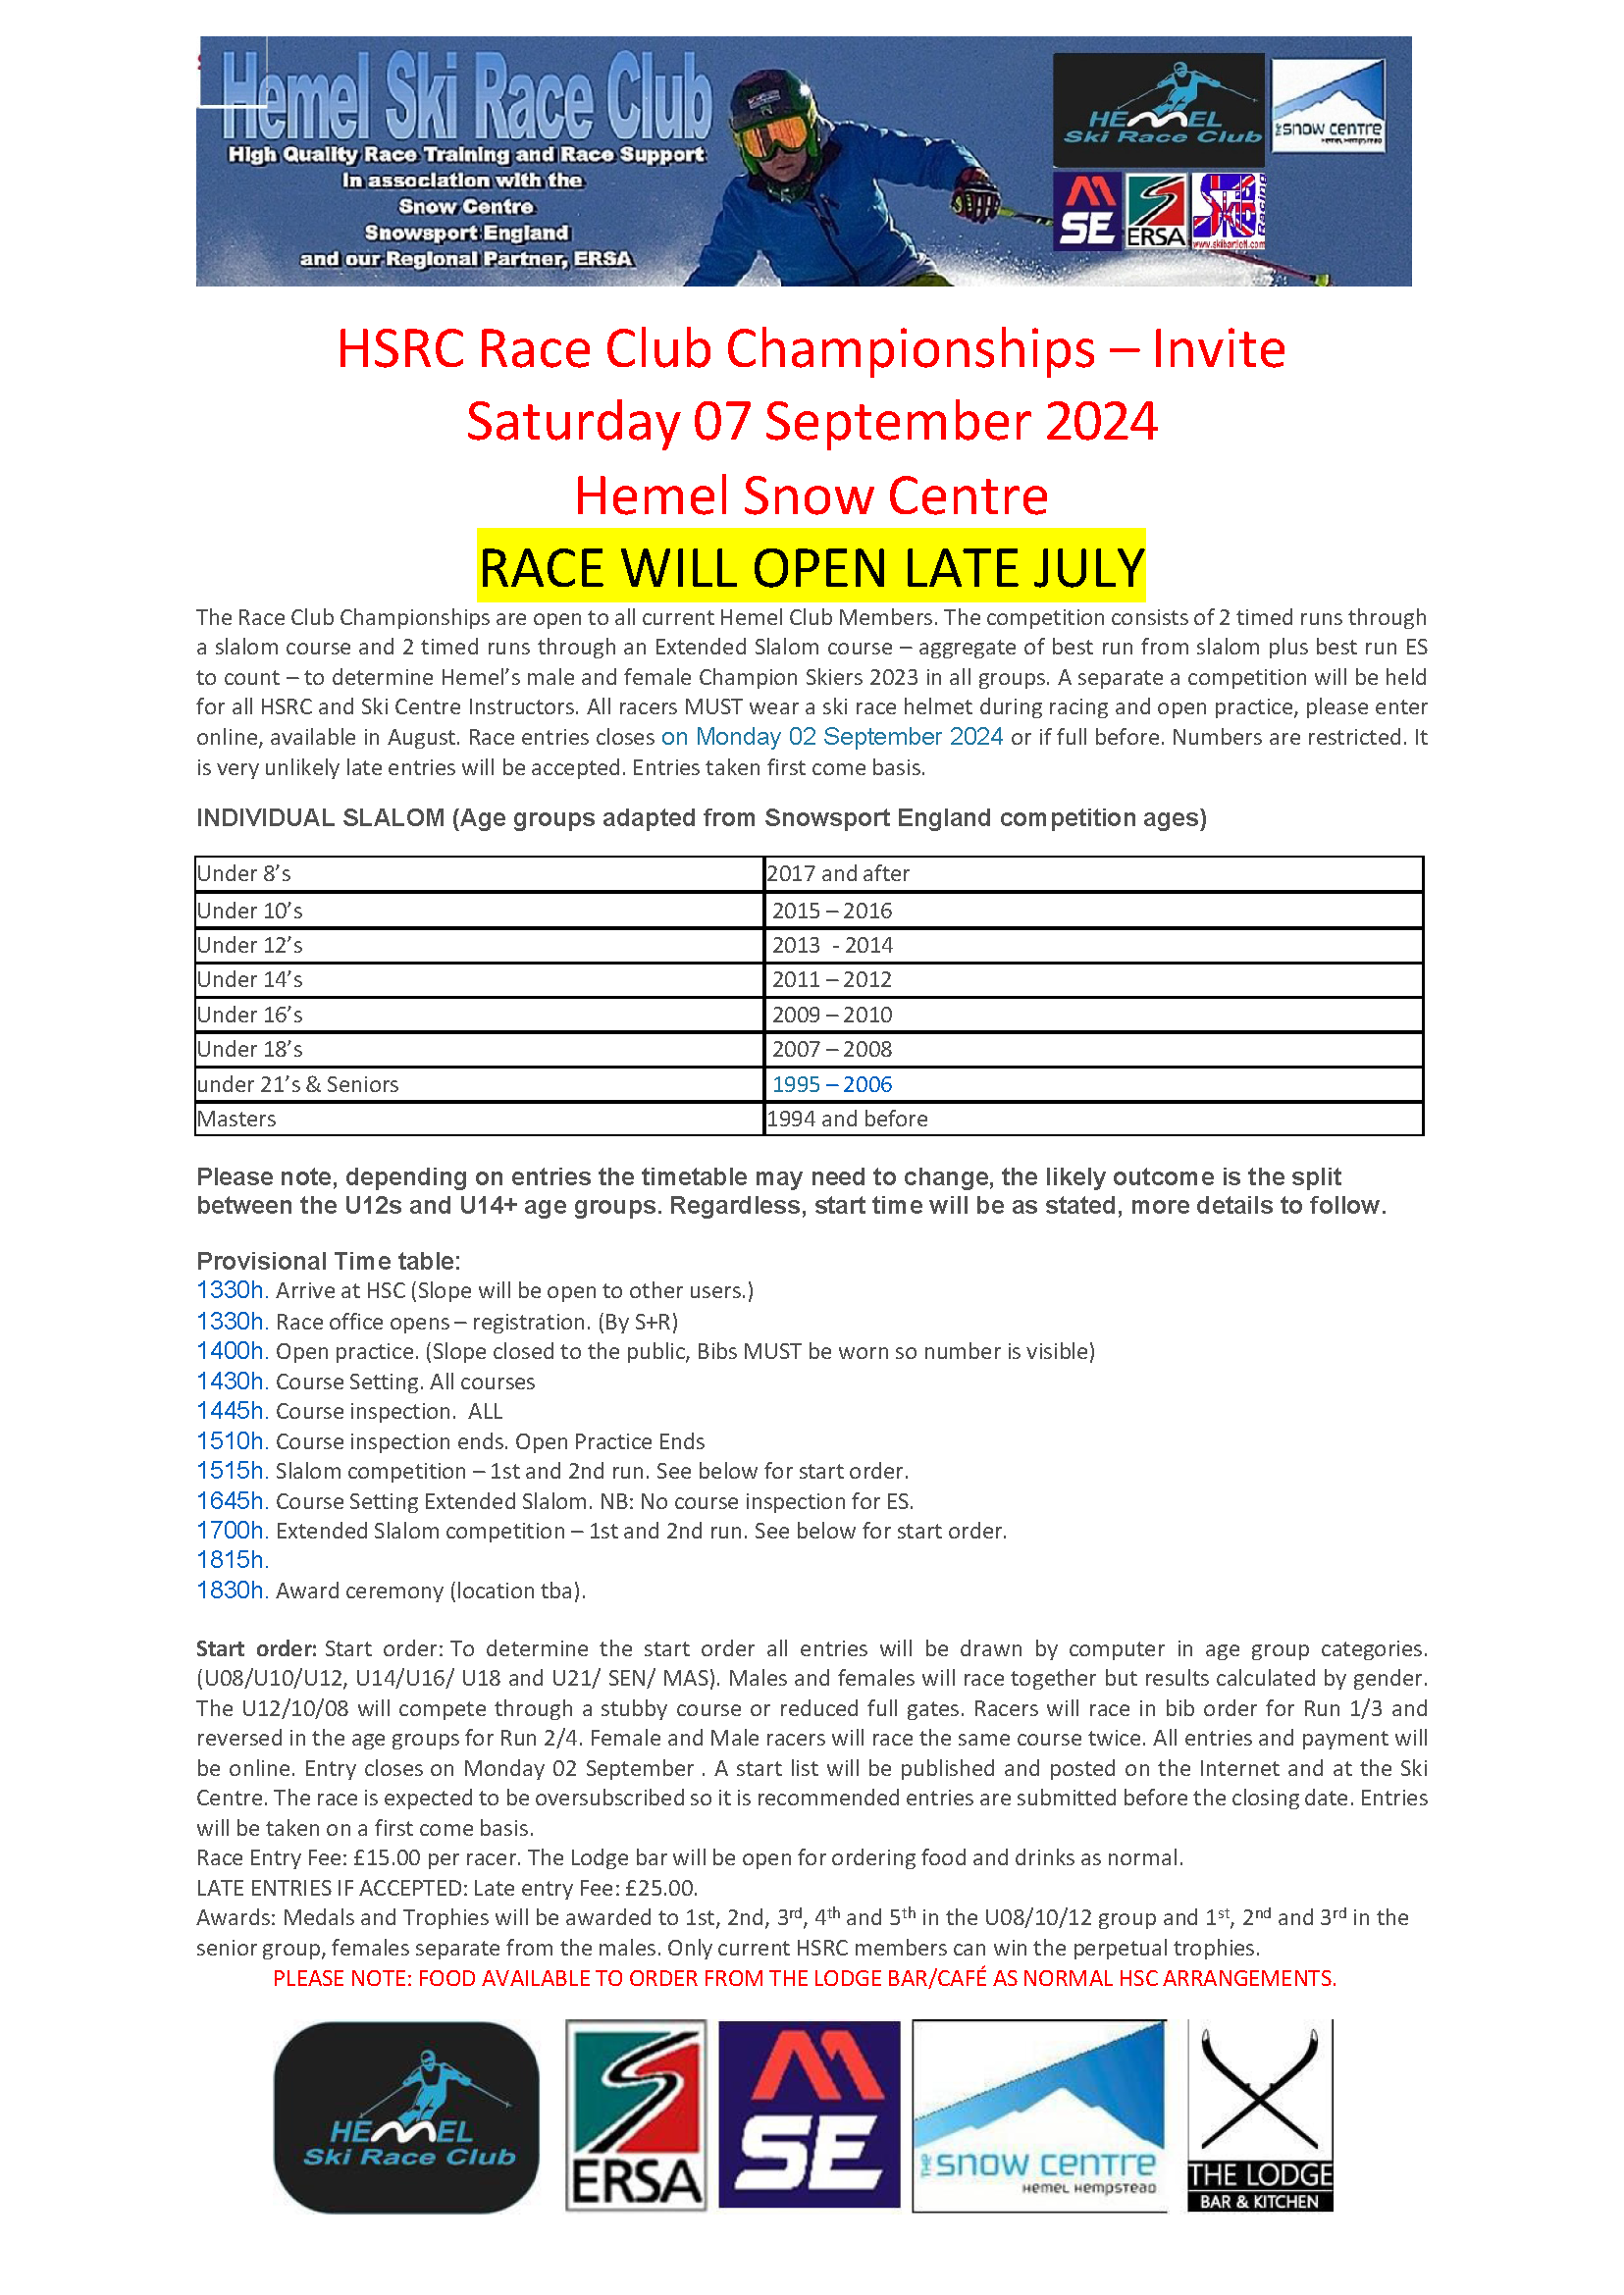 HSRC Championships - 07 September 2024